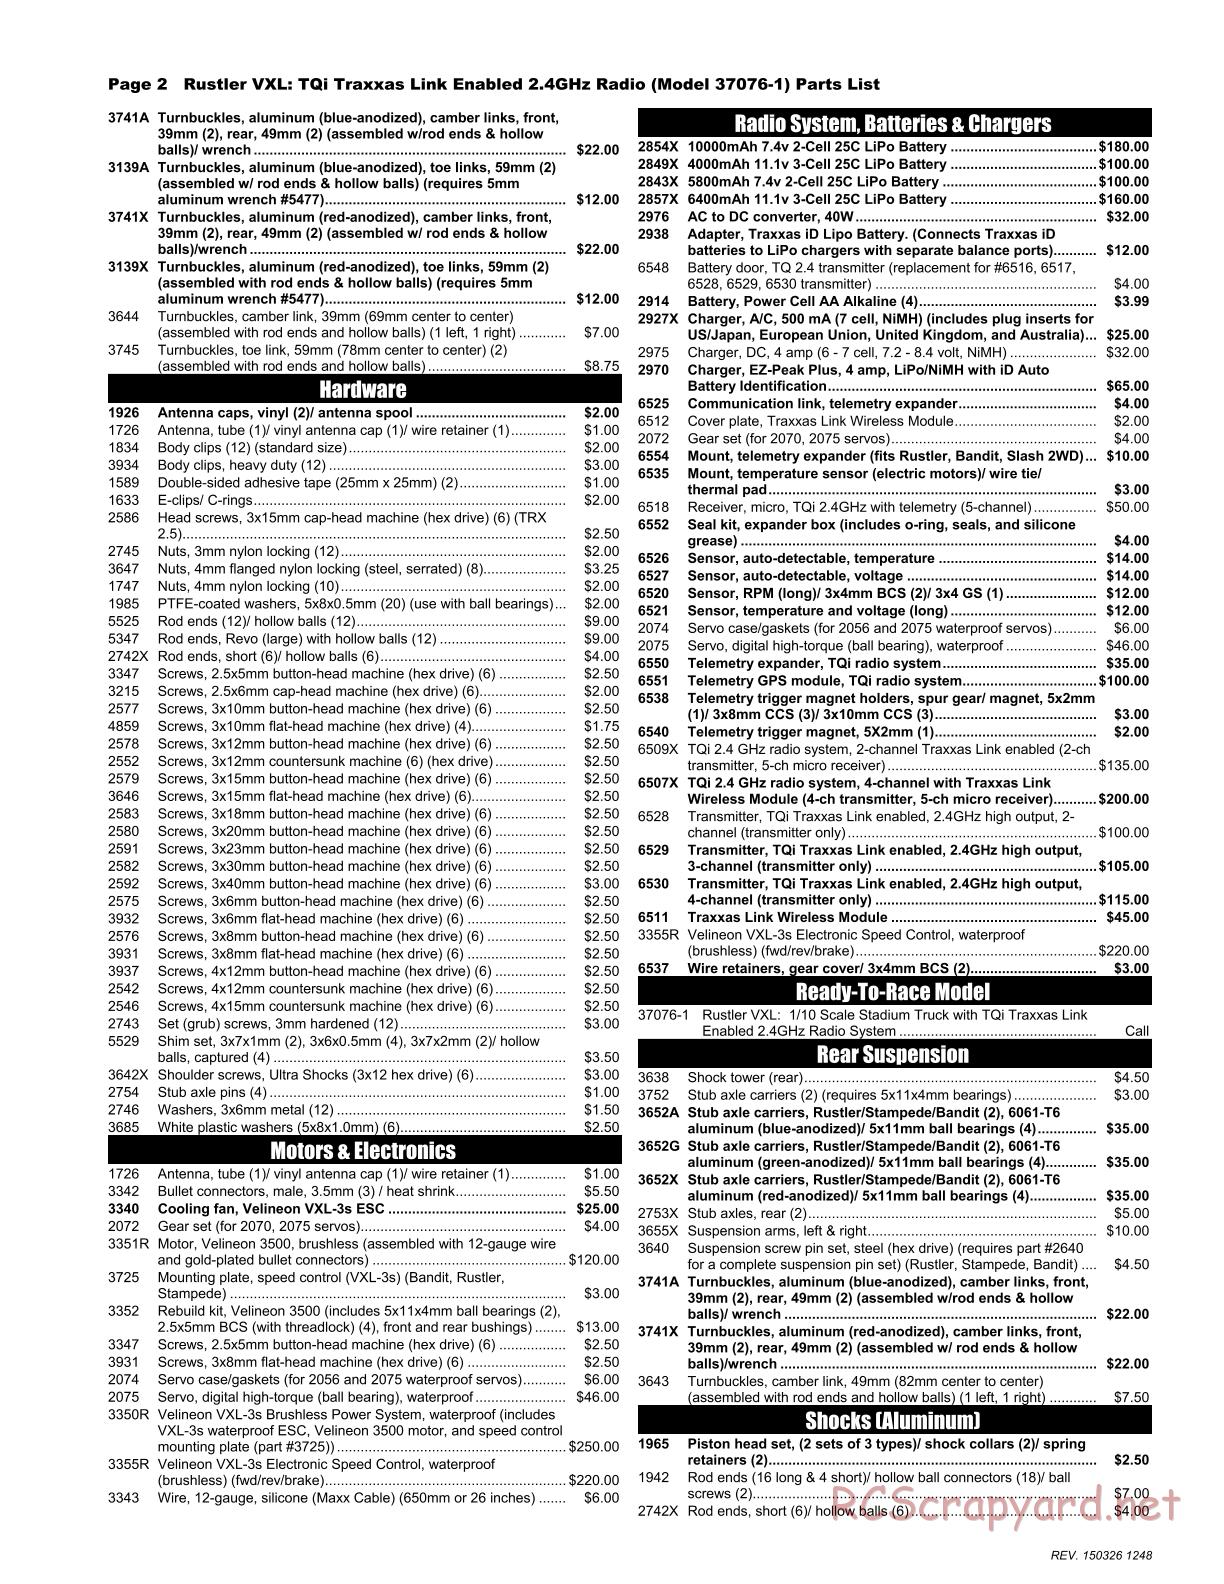 Traxxas - Rustler VXL (2015) - Parts List - Page 2